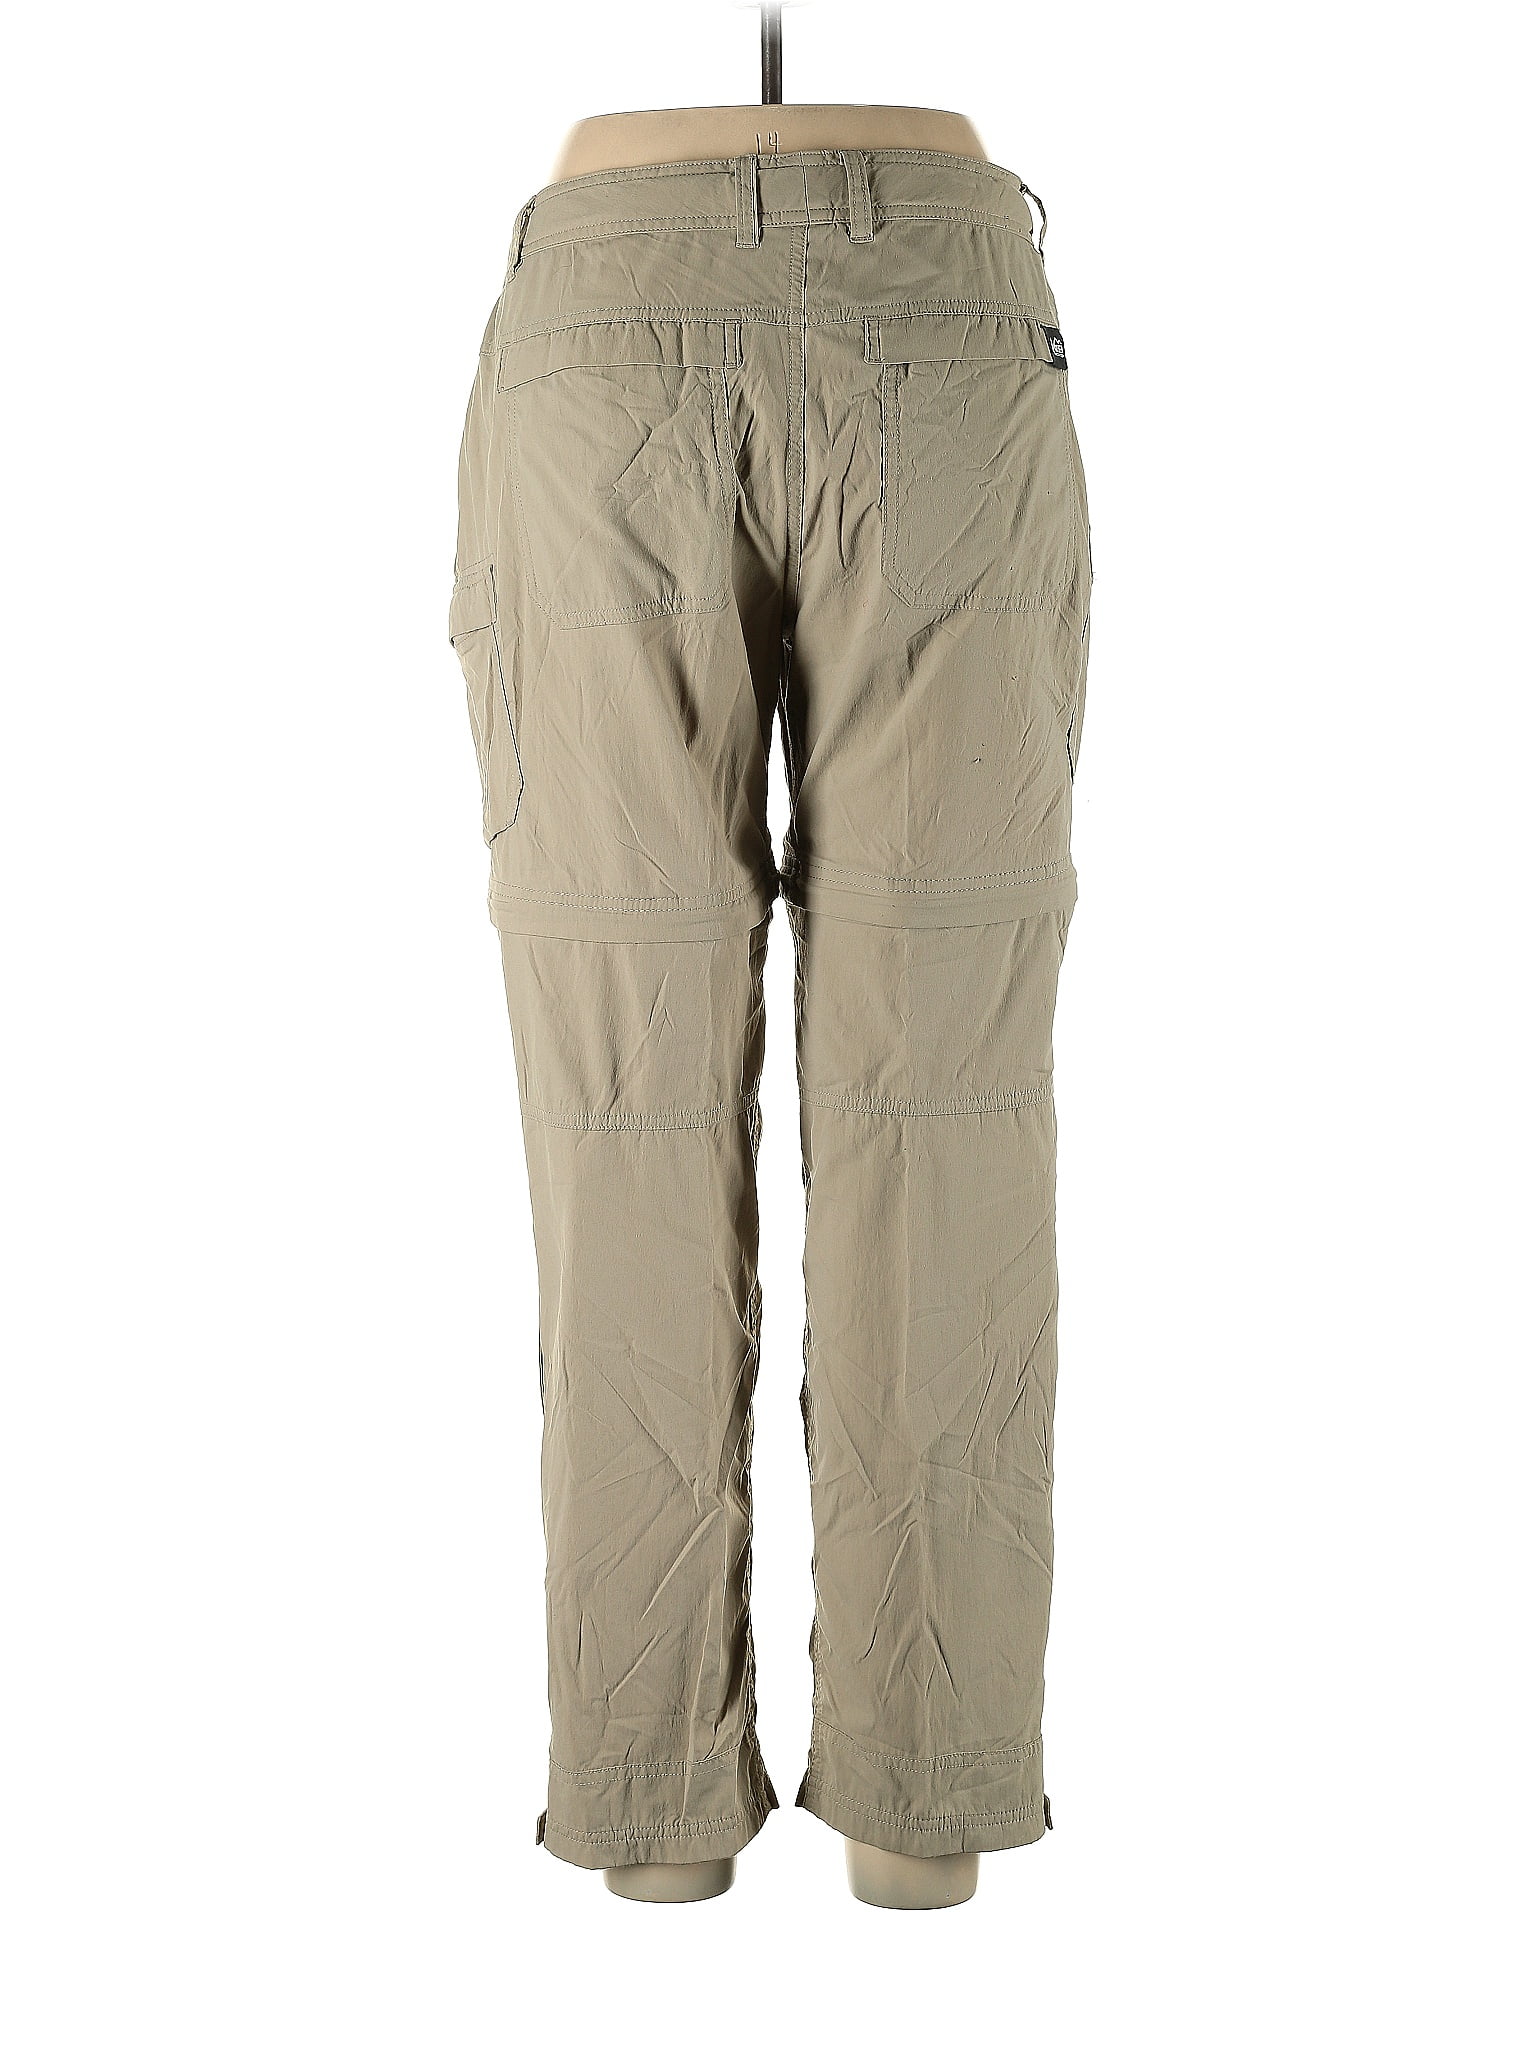 REI Co Op Solid Tan Cargo Pants Size 12 (Petite) - 71% off